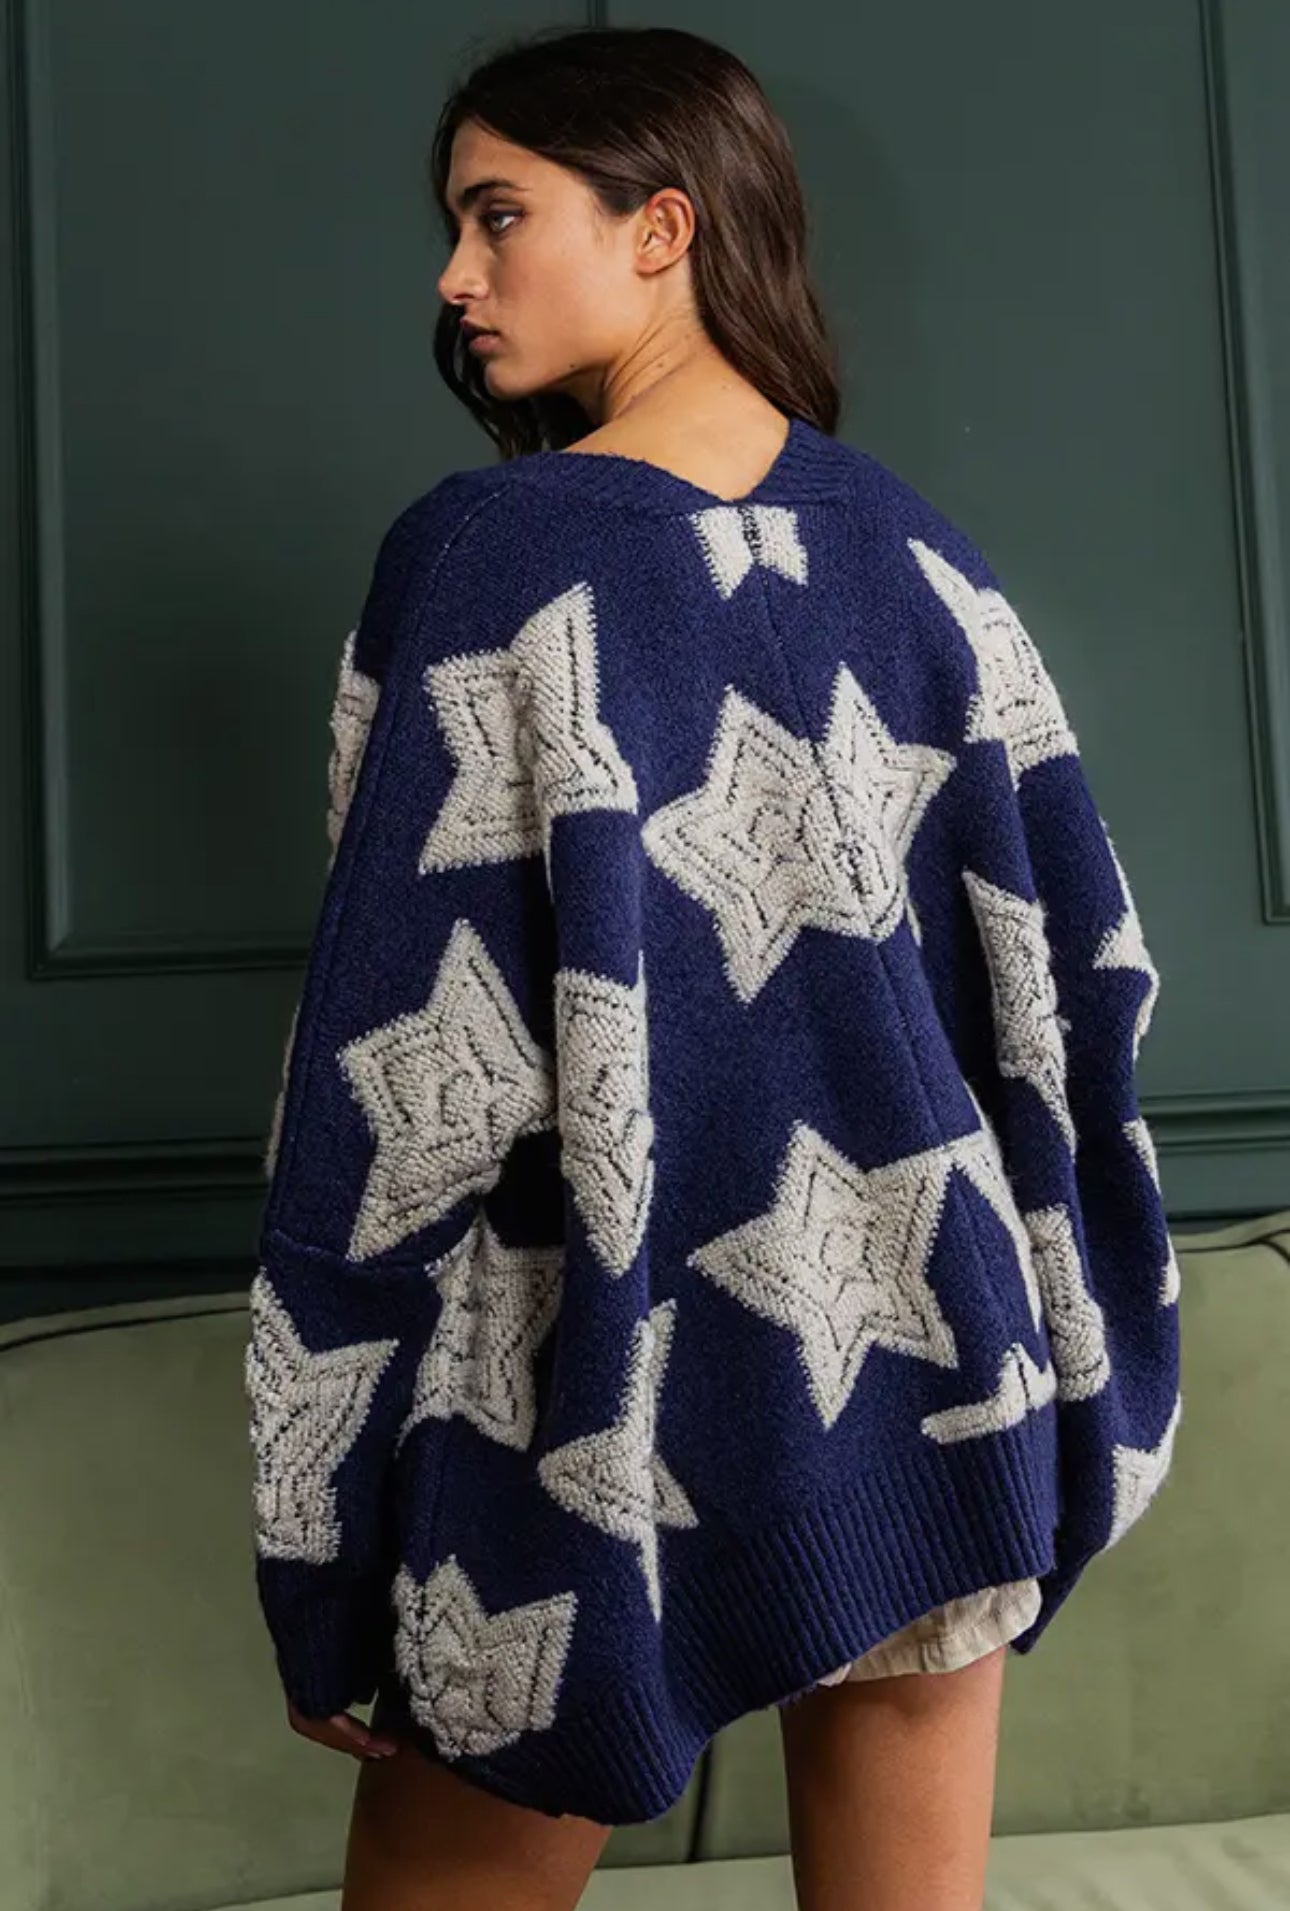 Star Spangled Sweater Cardigan